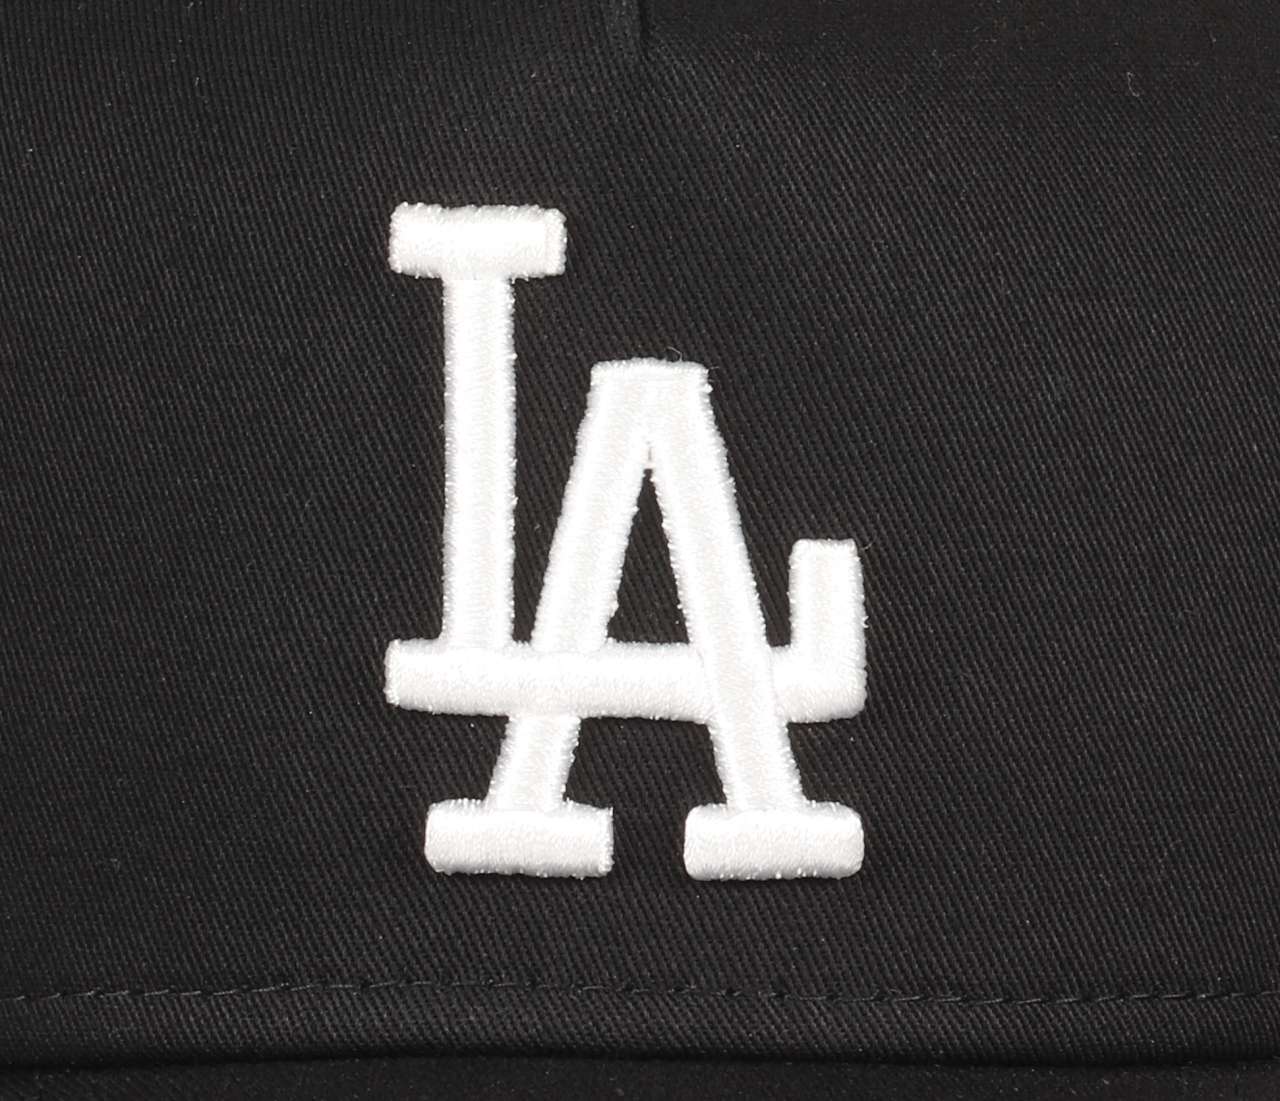  Los Angeles Dodgers MLB Black 9Forty A-Frame Snapback Cap New Era